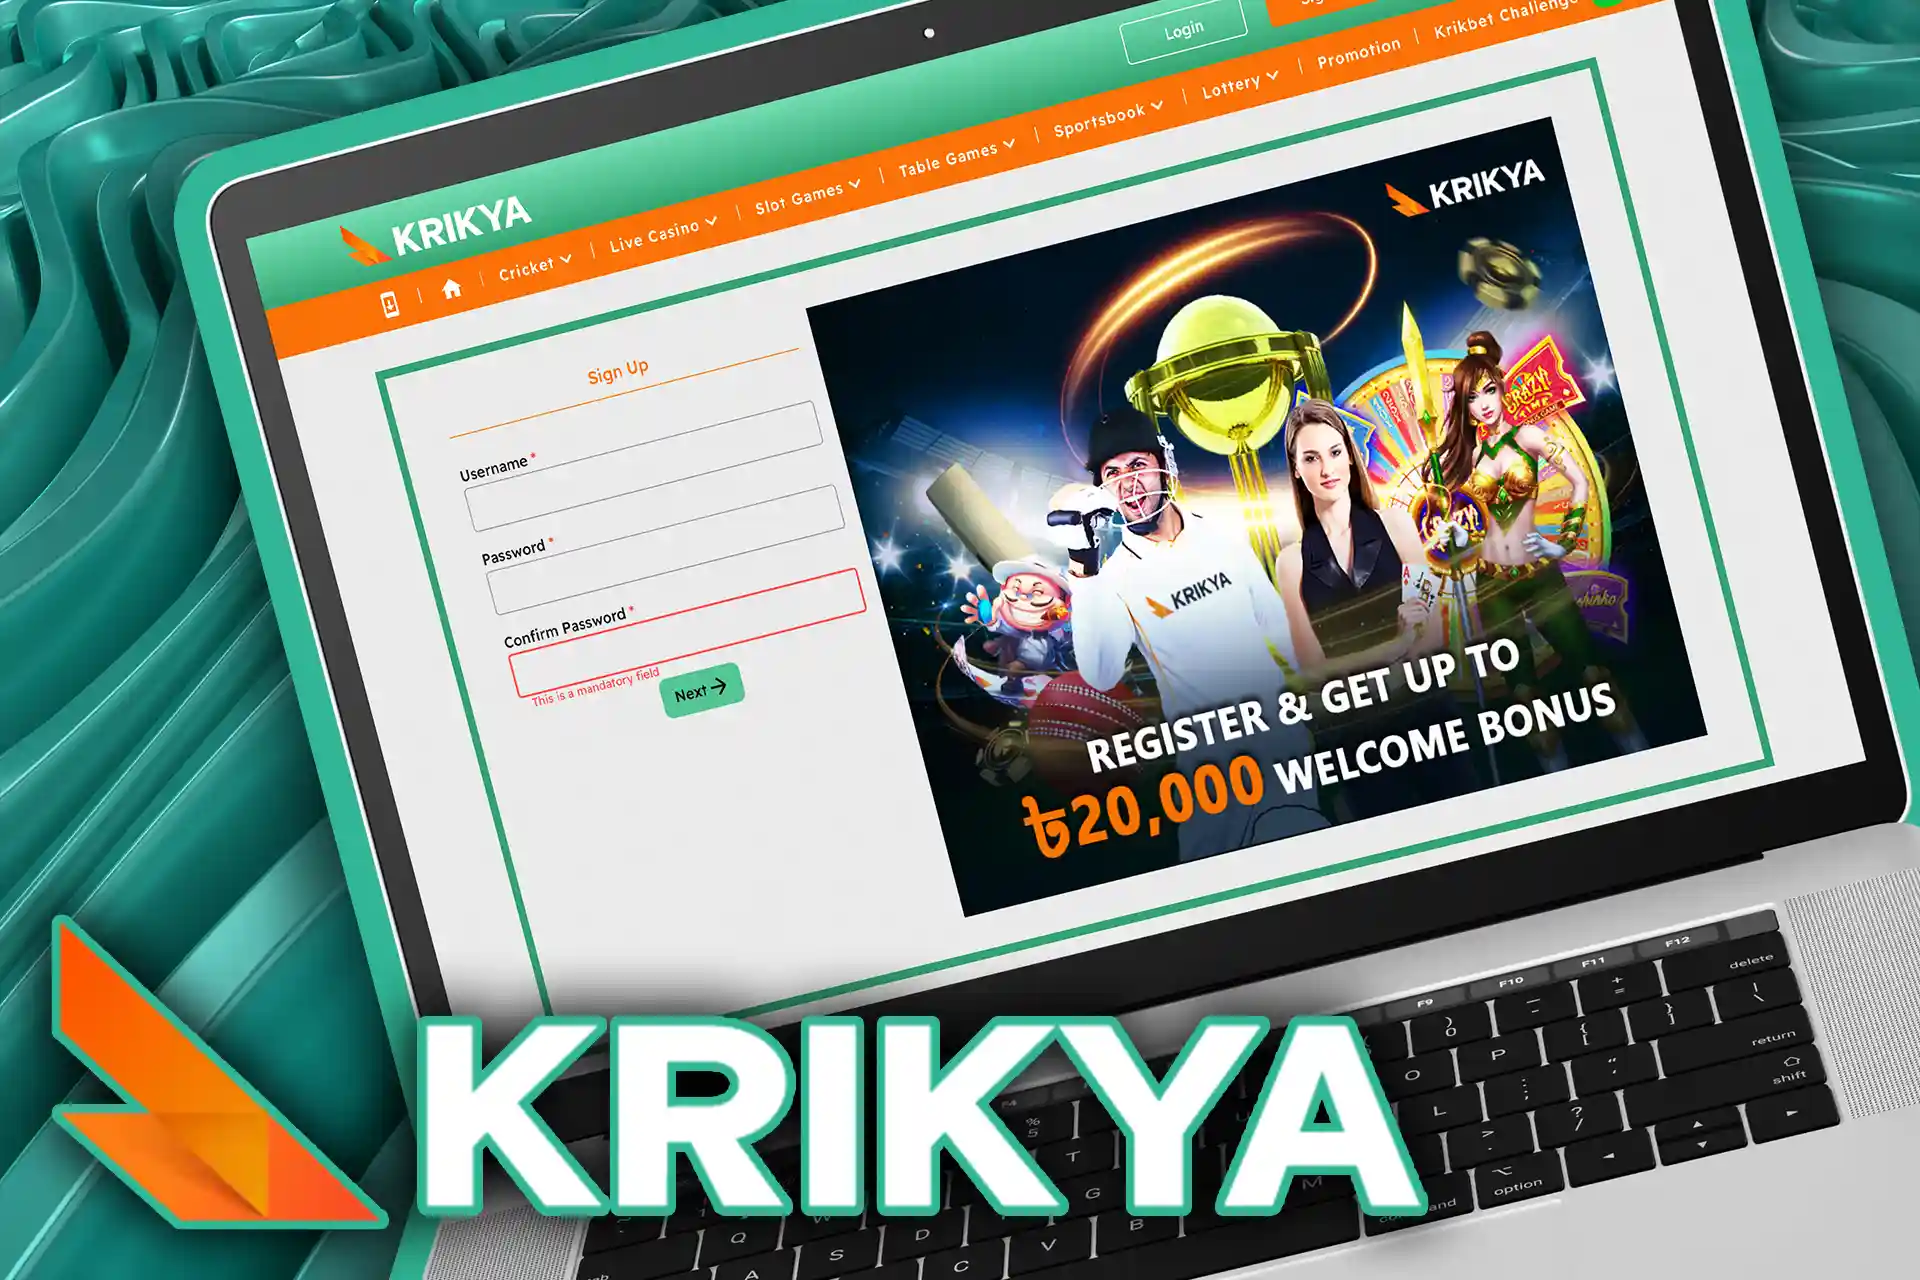 Sign up for Krikya Bangladesh and start placing bets.